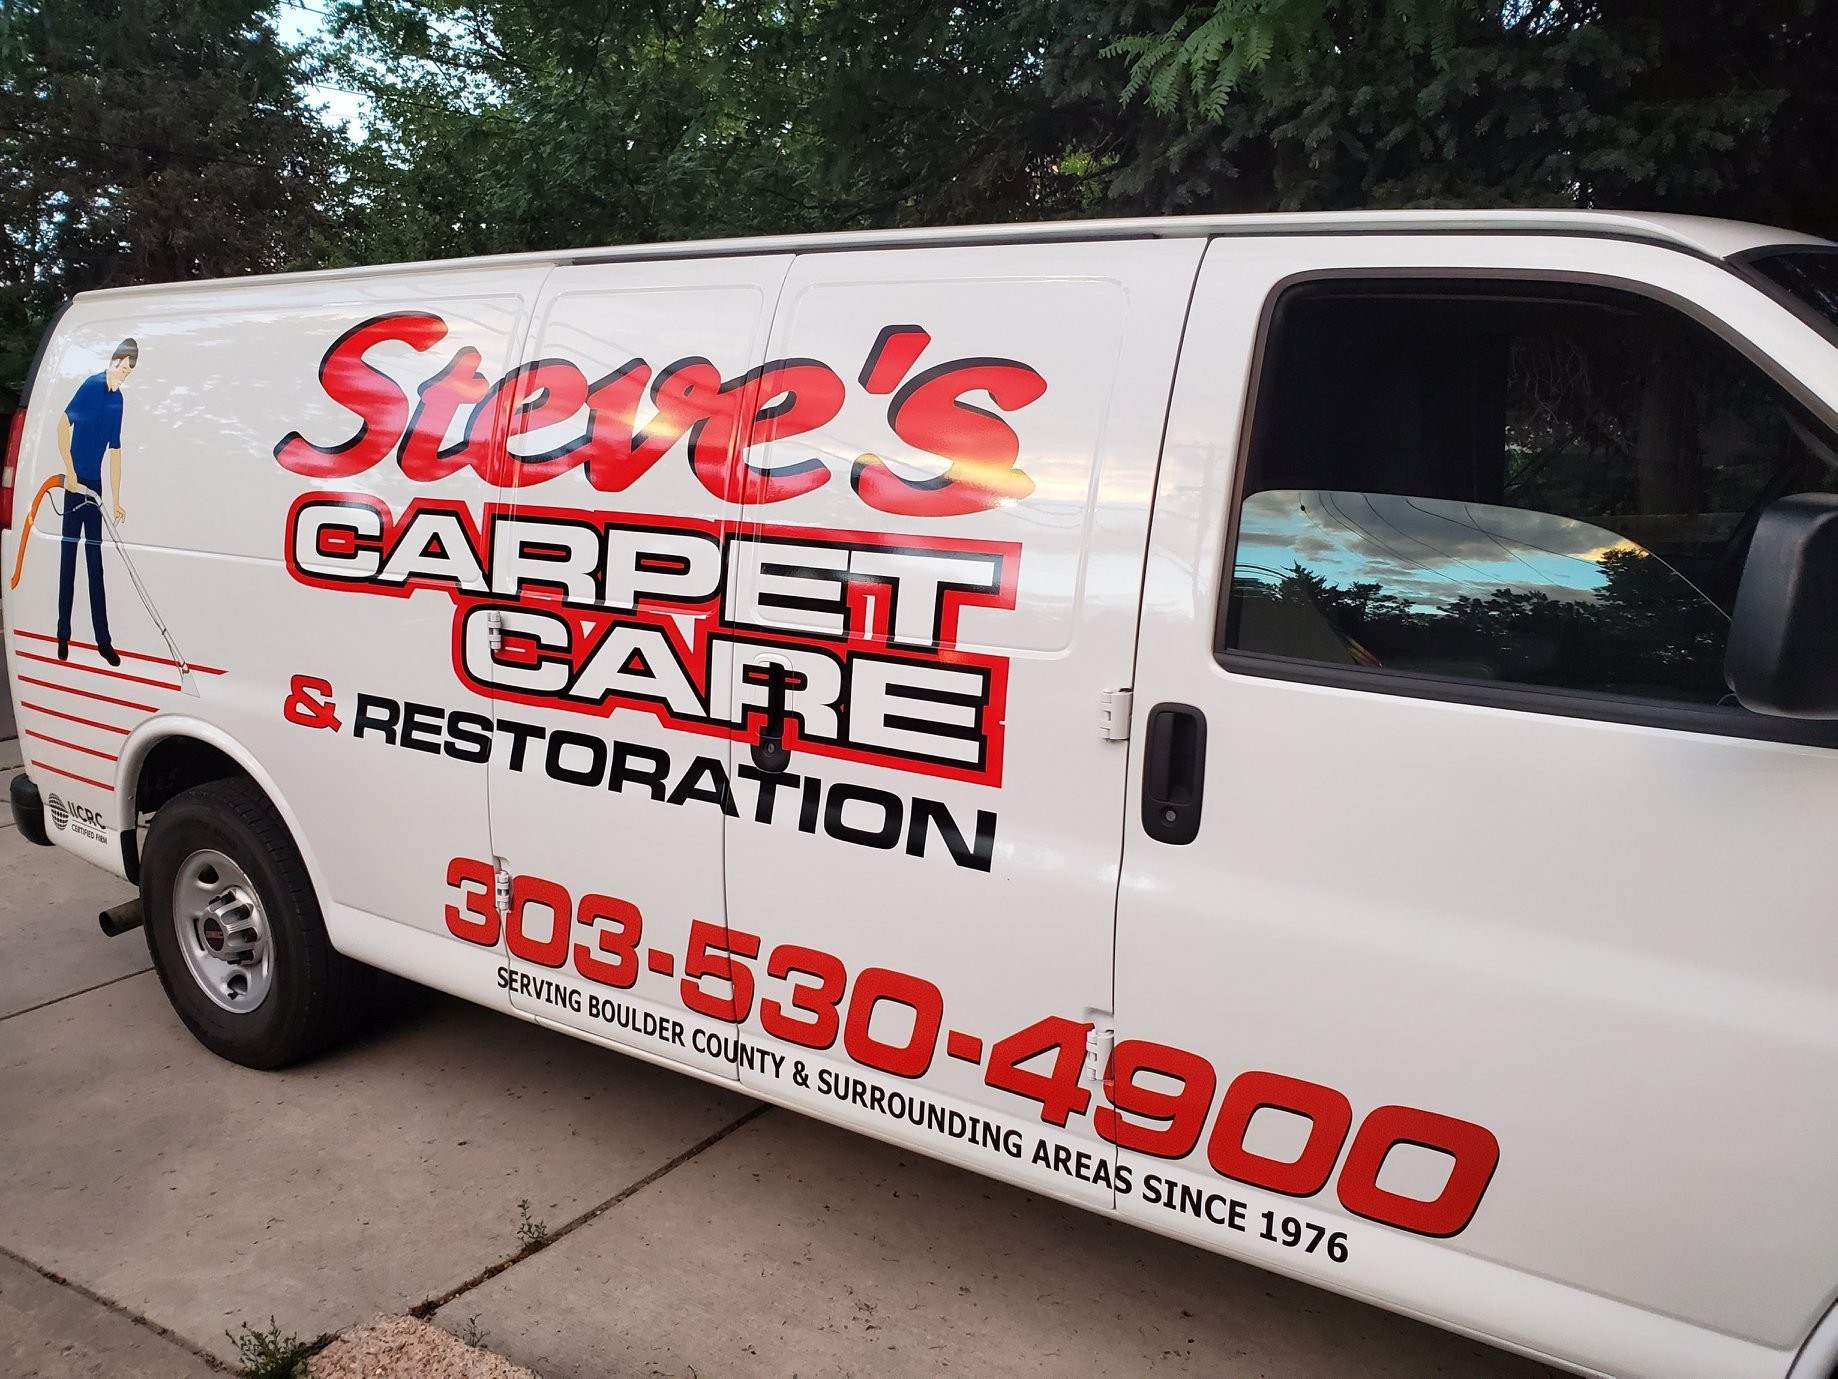 Steve's Carpet Care Service Truck